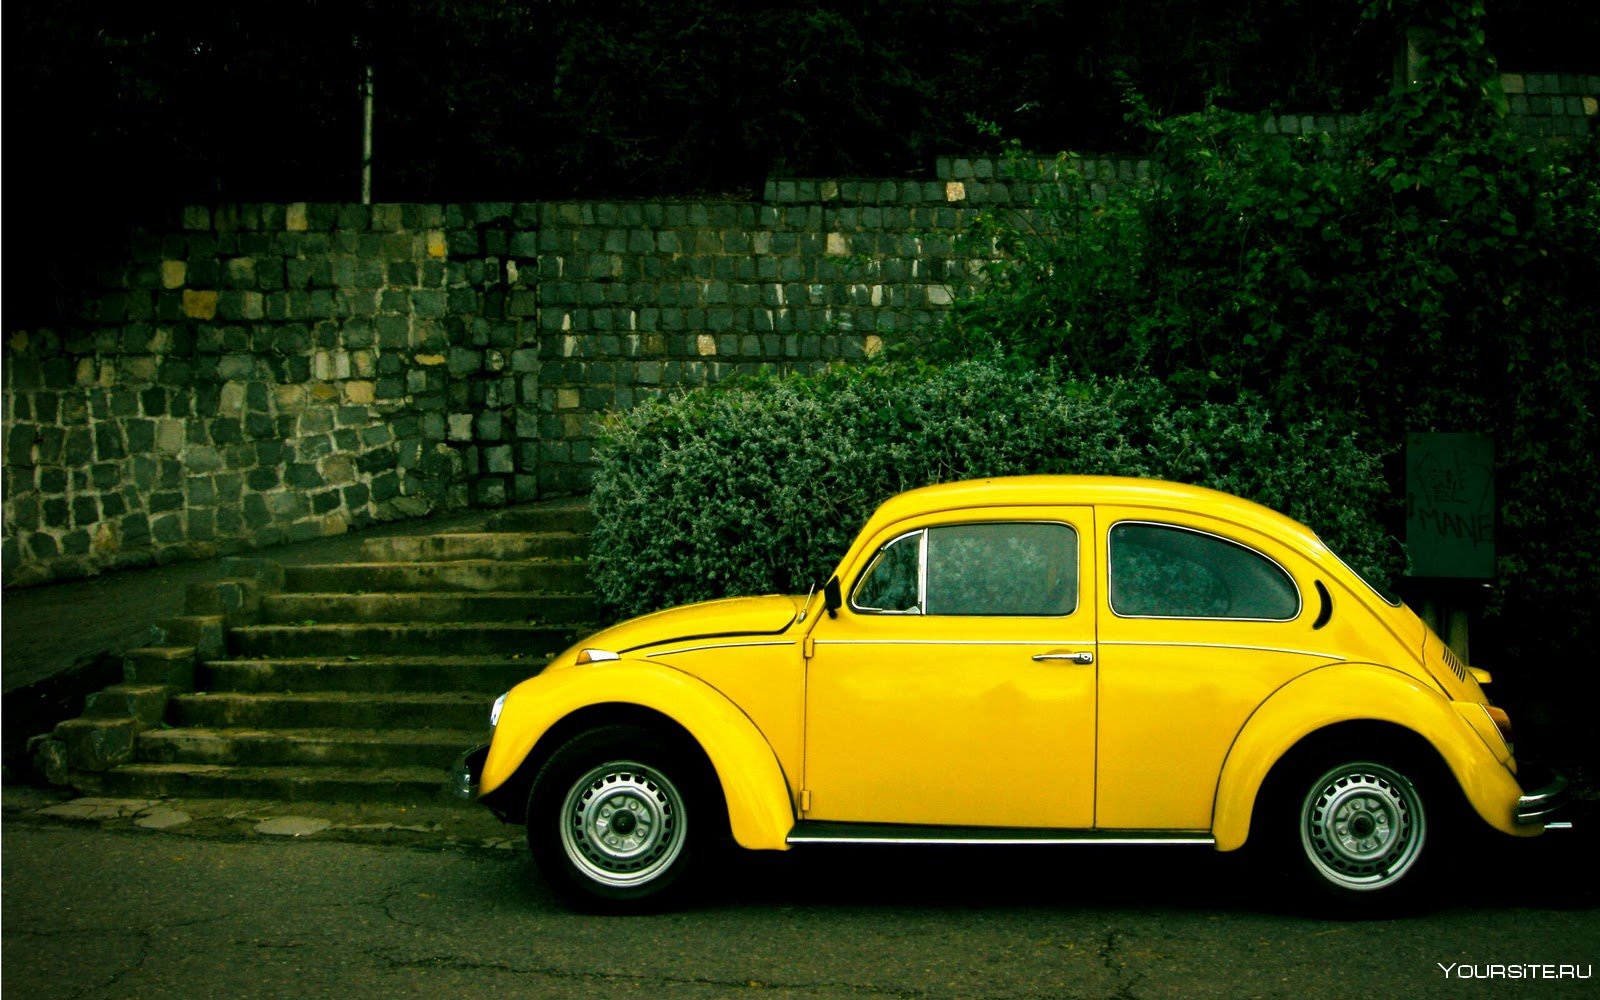 Volkswagen желтый. Фольксваген Битл желтый Жук. Желтый Жук Эммы Свон. Volkswagen Beetle желтый. Volkswagen Beetle 1963 желтый.